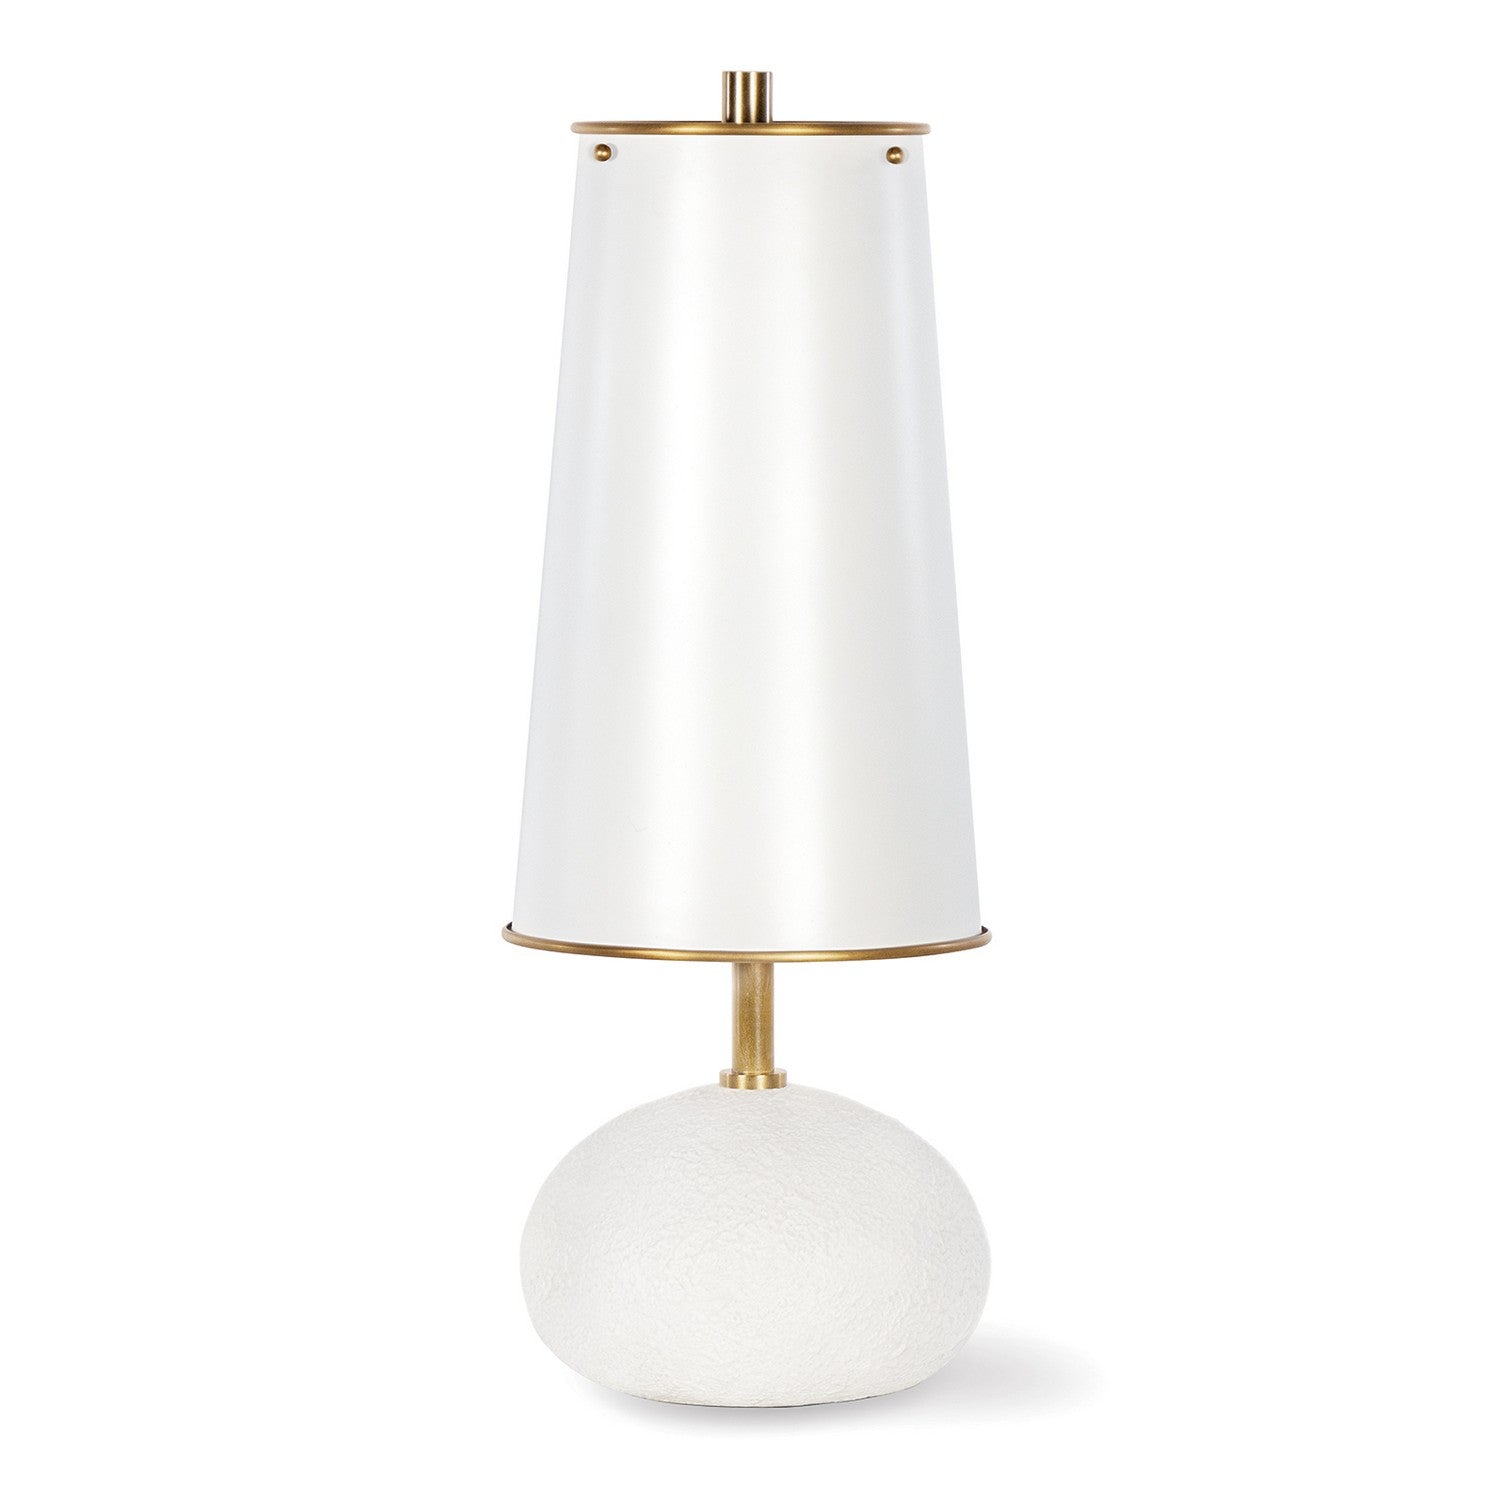 Regina Andrew - 13-1550WT - One Light Mini Lamp - Hattie - White